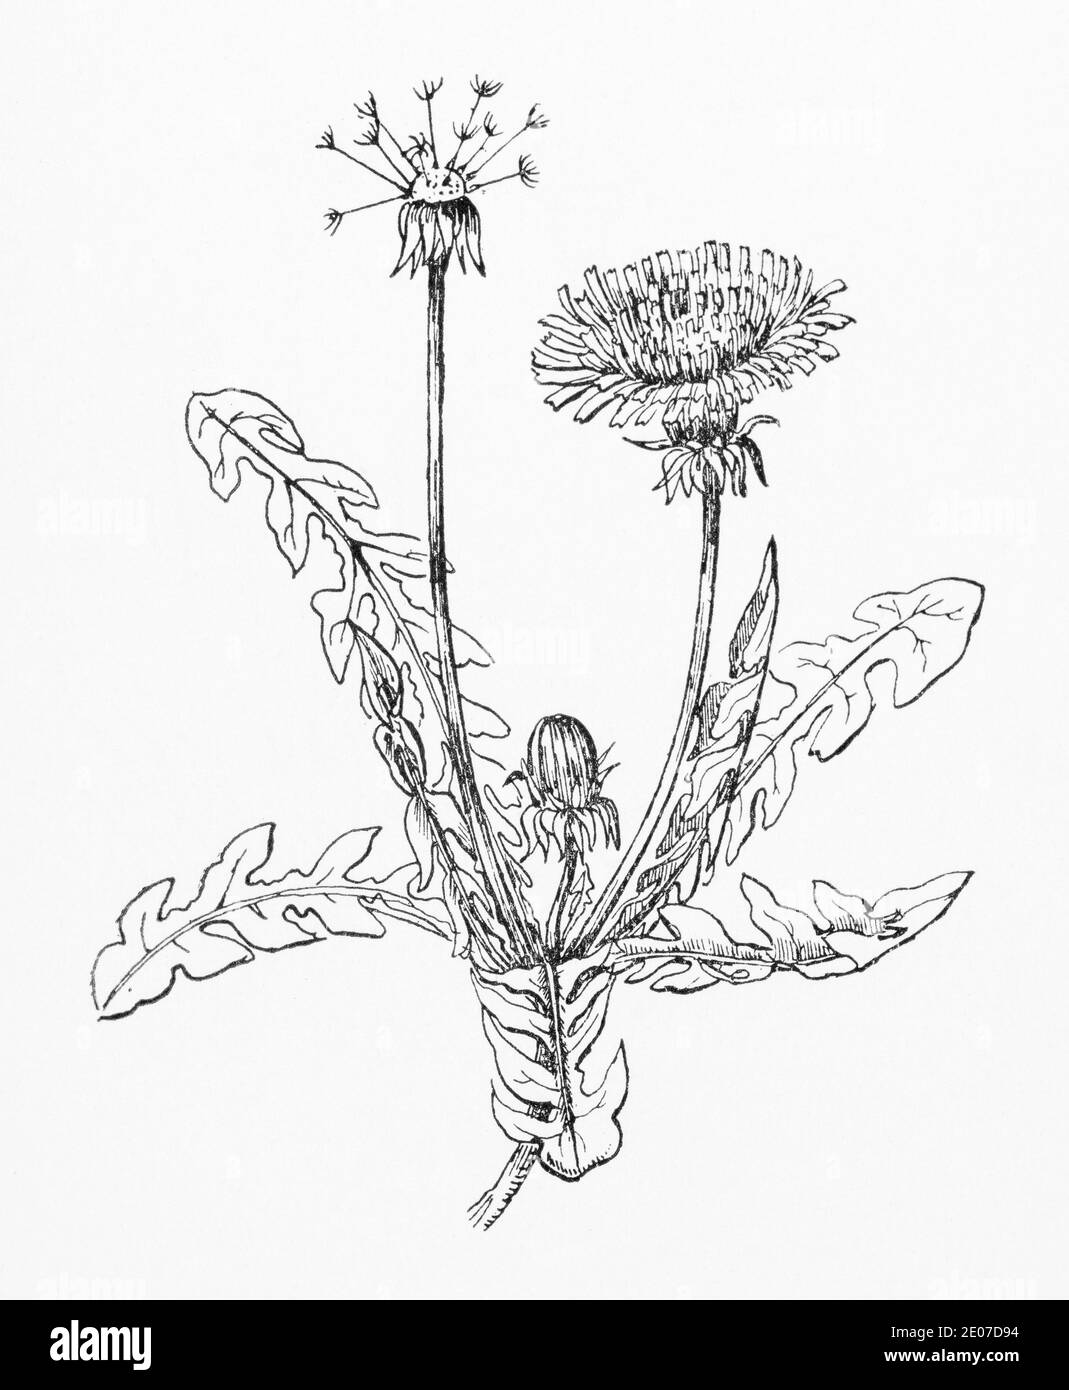 Old botanical illustration engraving of Dandelion / Taraxacum officinale. Traditional medicinal herbal plant. See Notes Stock Photo